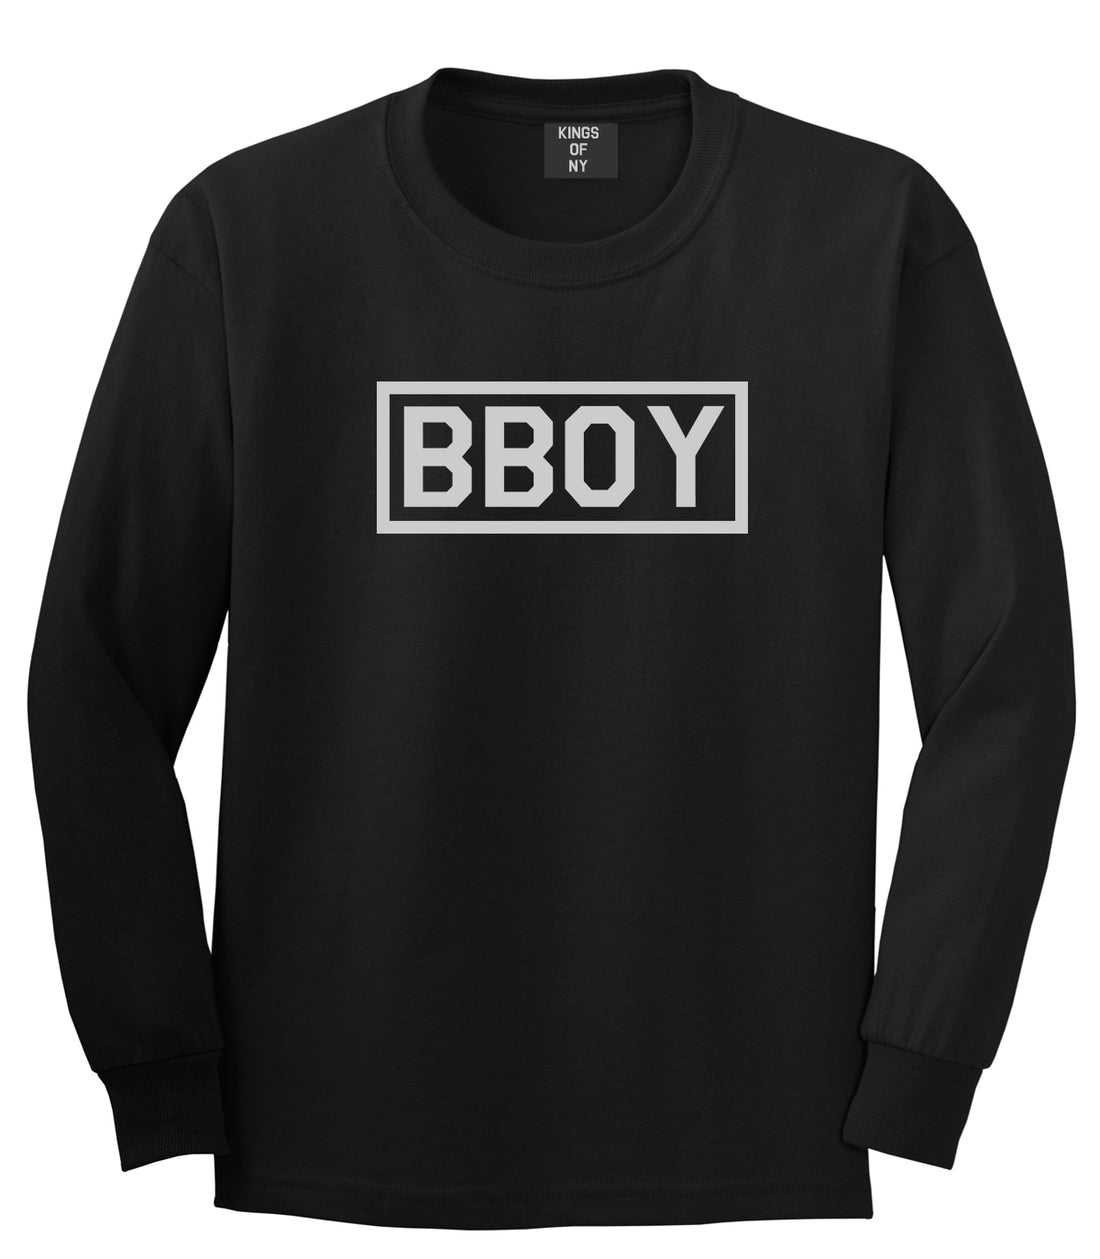 Bboy Breakdancing Black Long Sleeve T-Shirt by Kings Of NY